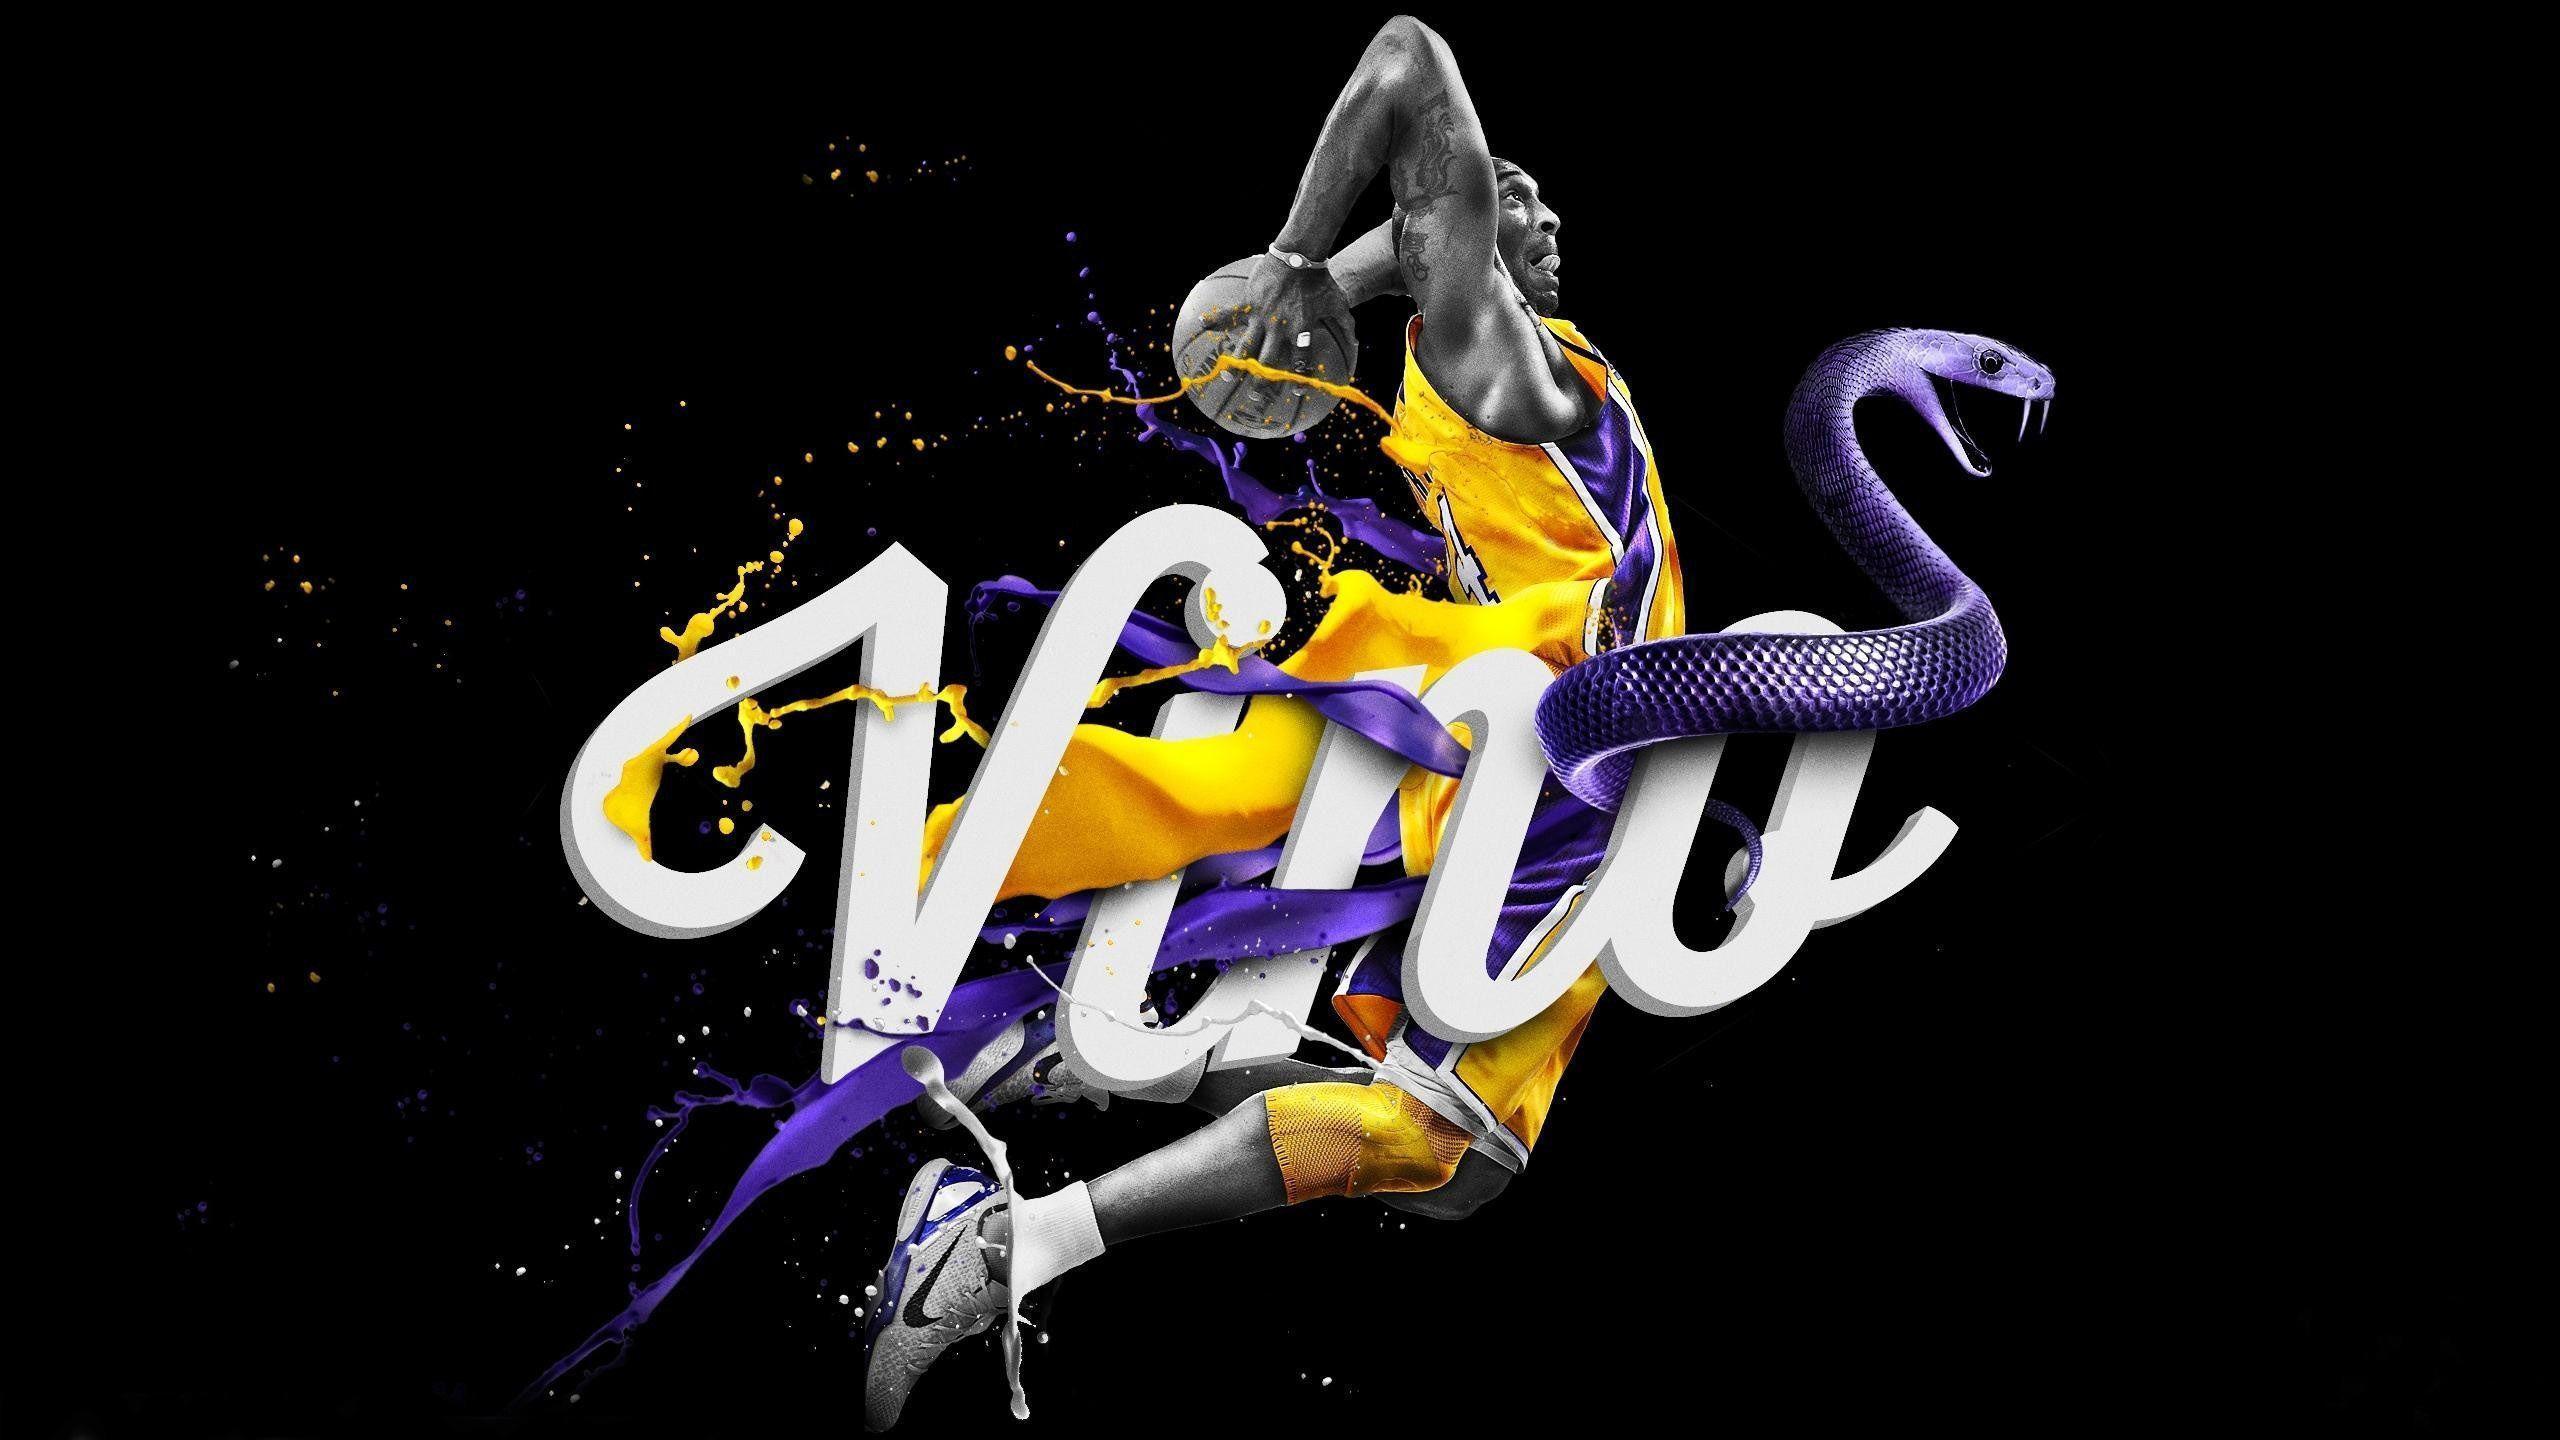 Los Angeles Lakers NBA Kobe Bryant Wallpaper Wide or HD. Male